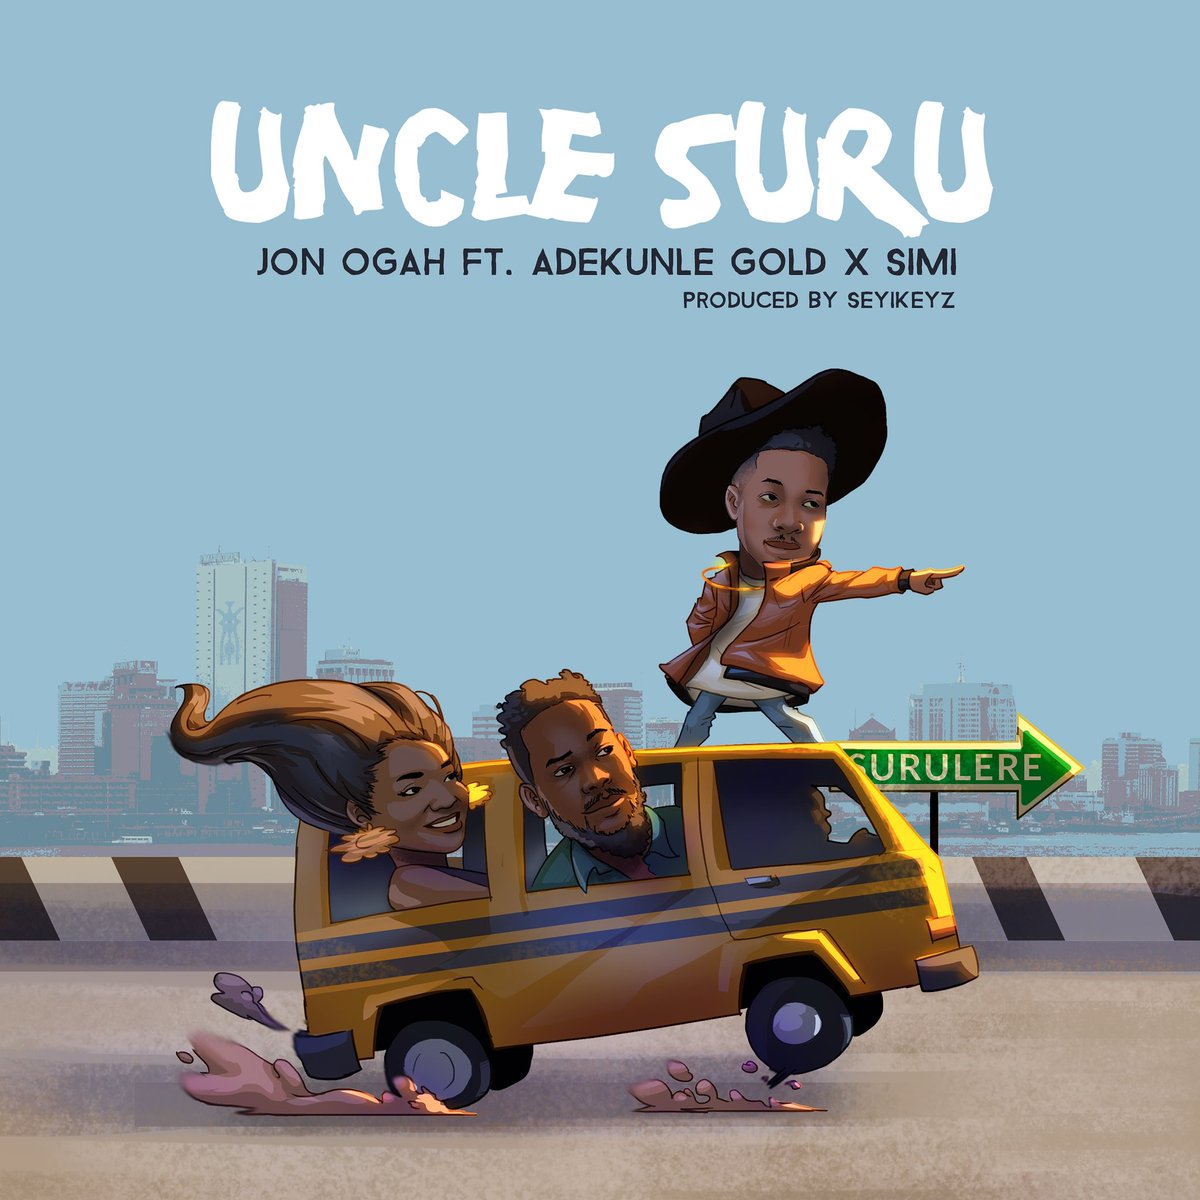 Jon Ogah Ft Adekunle Gold & Simi - Uncle Suru